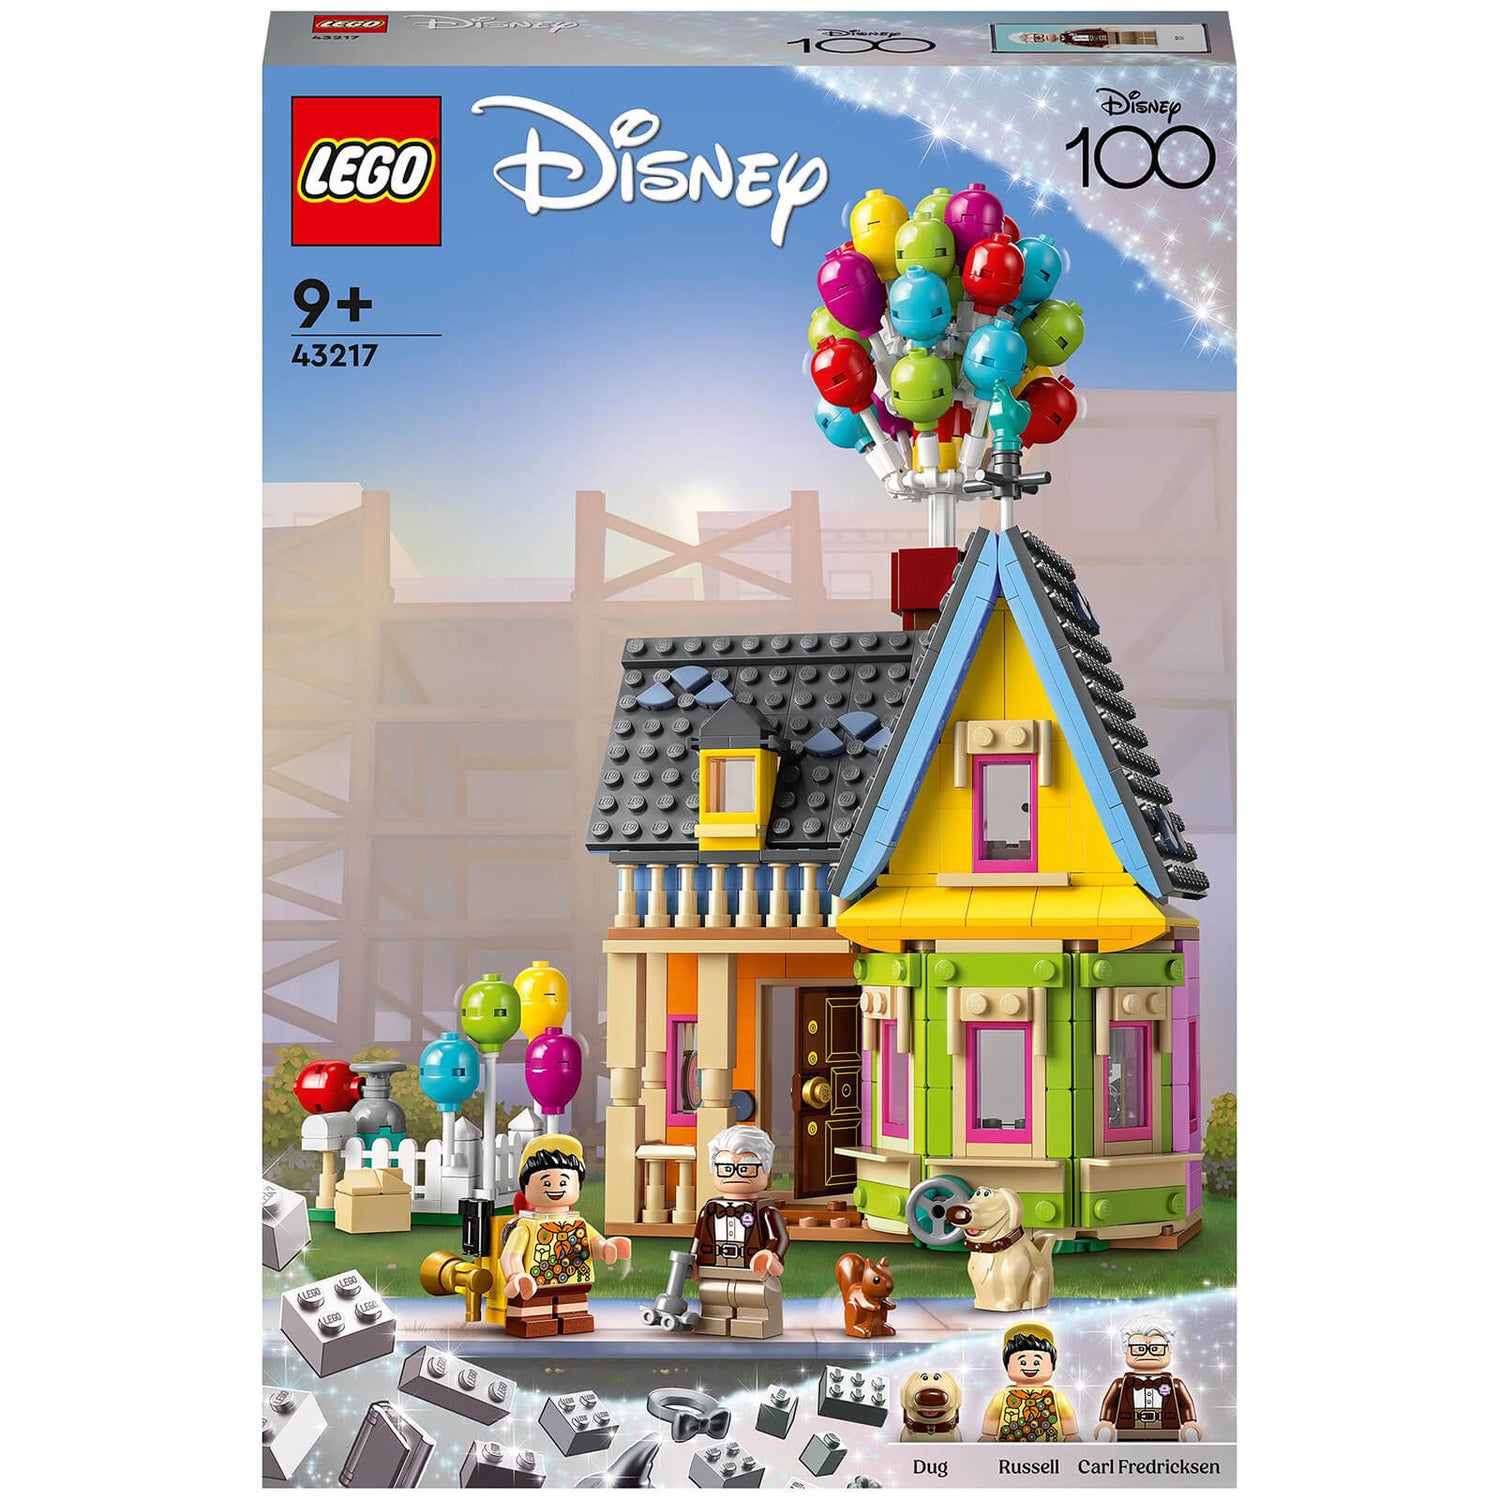 LEGO Disney : Pixar ‘Up’ House Model Building (43217)